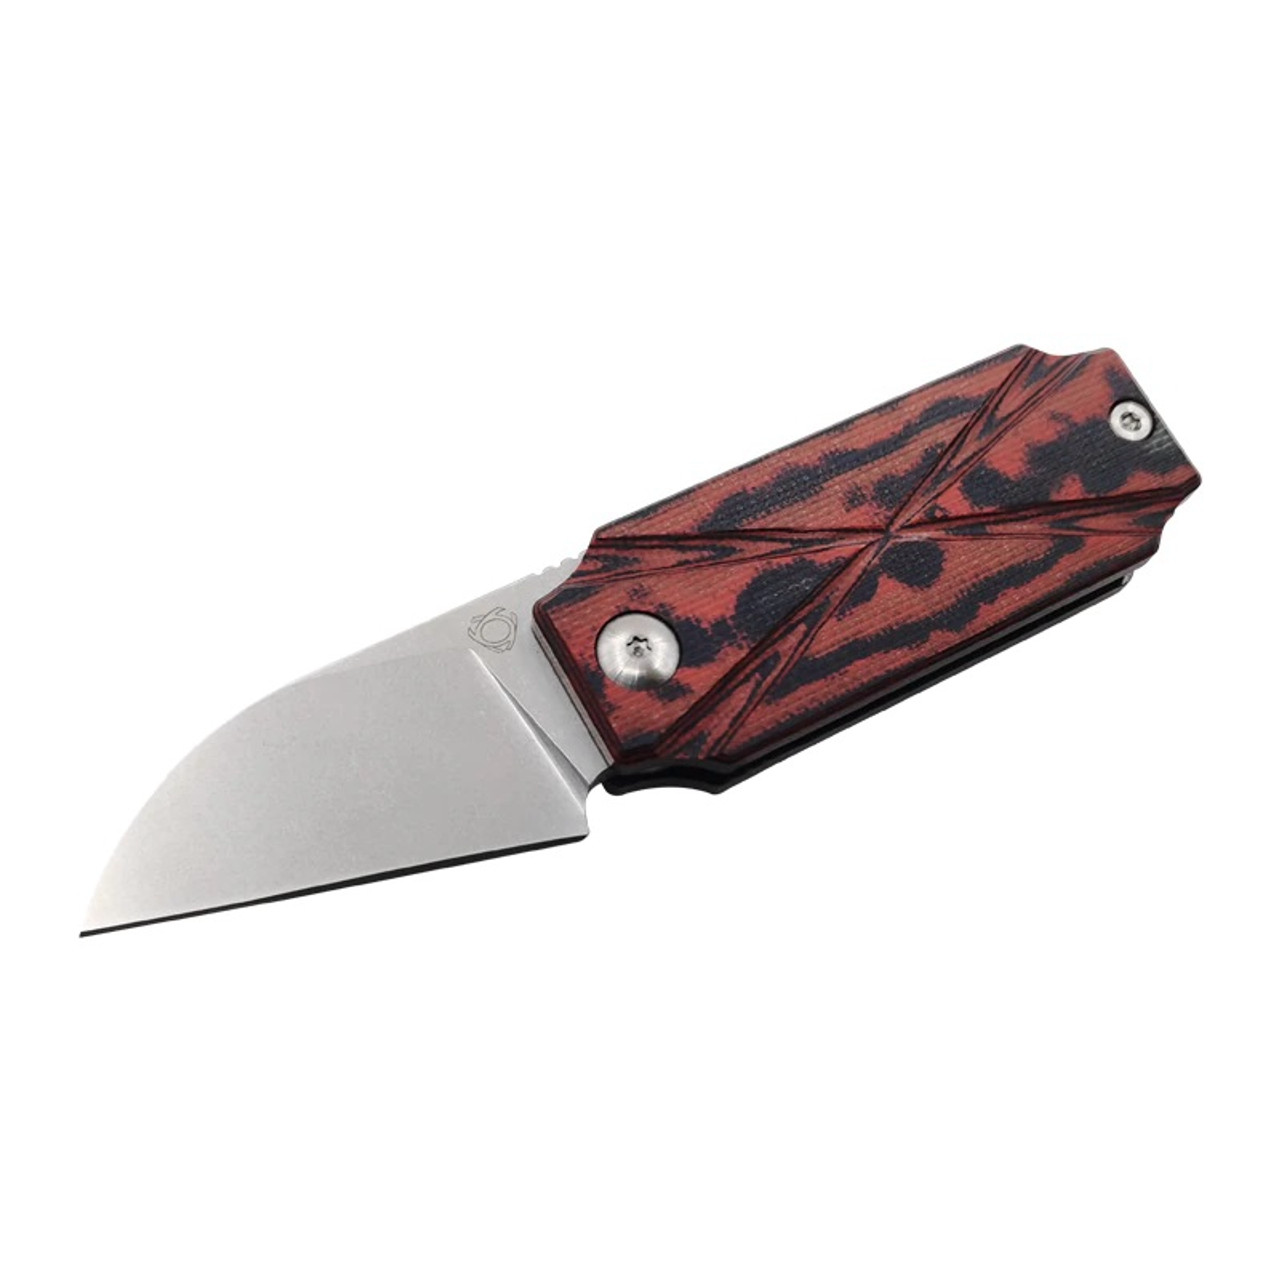 SixLeaf SL-13 Chaotic Red Folding Knife